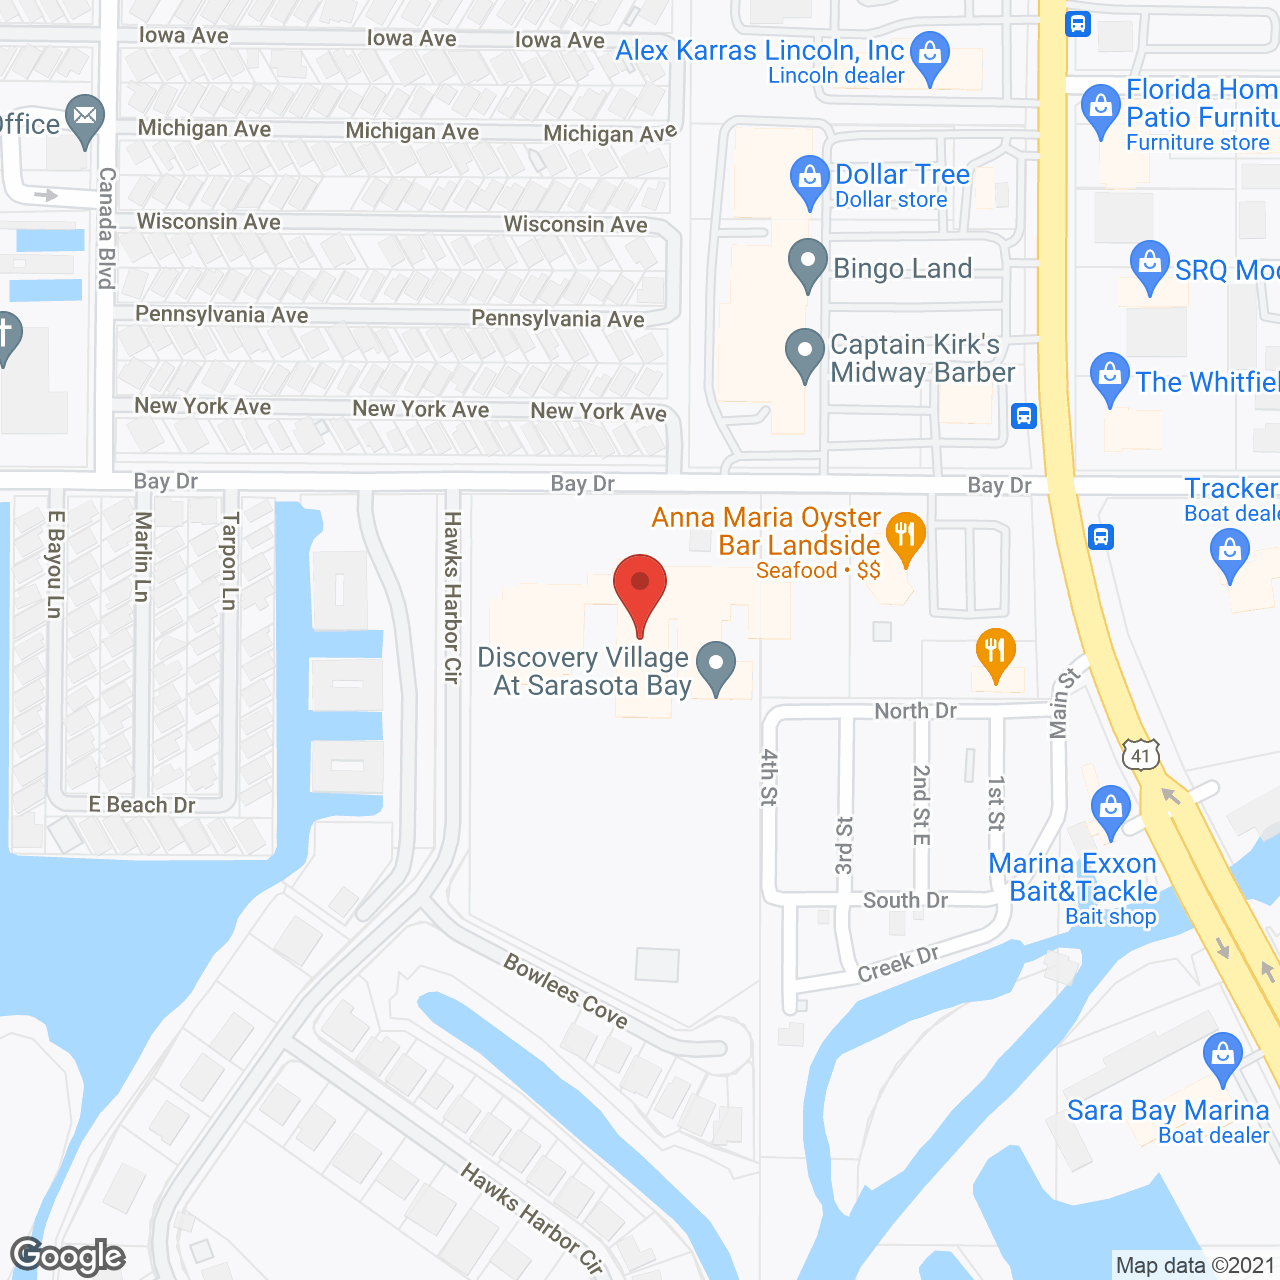 Discovery Village at Sarasota Bay in google map